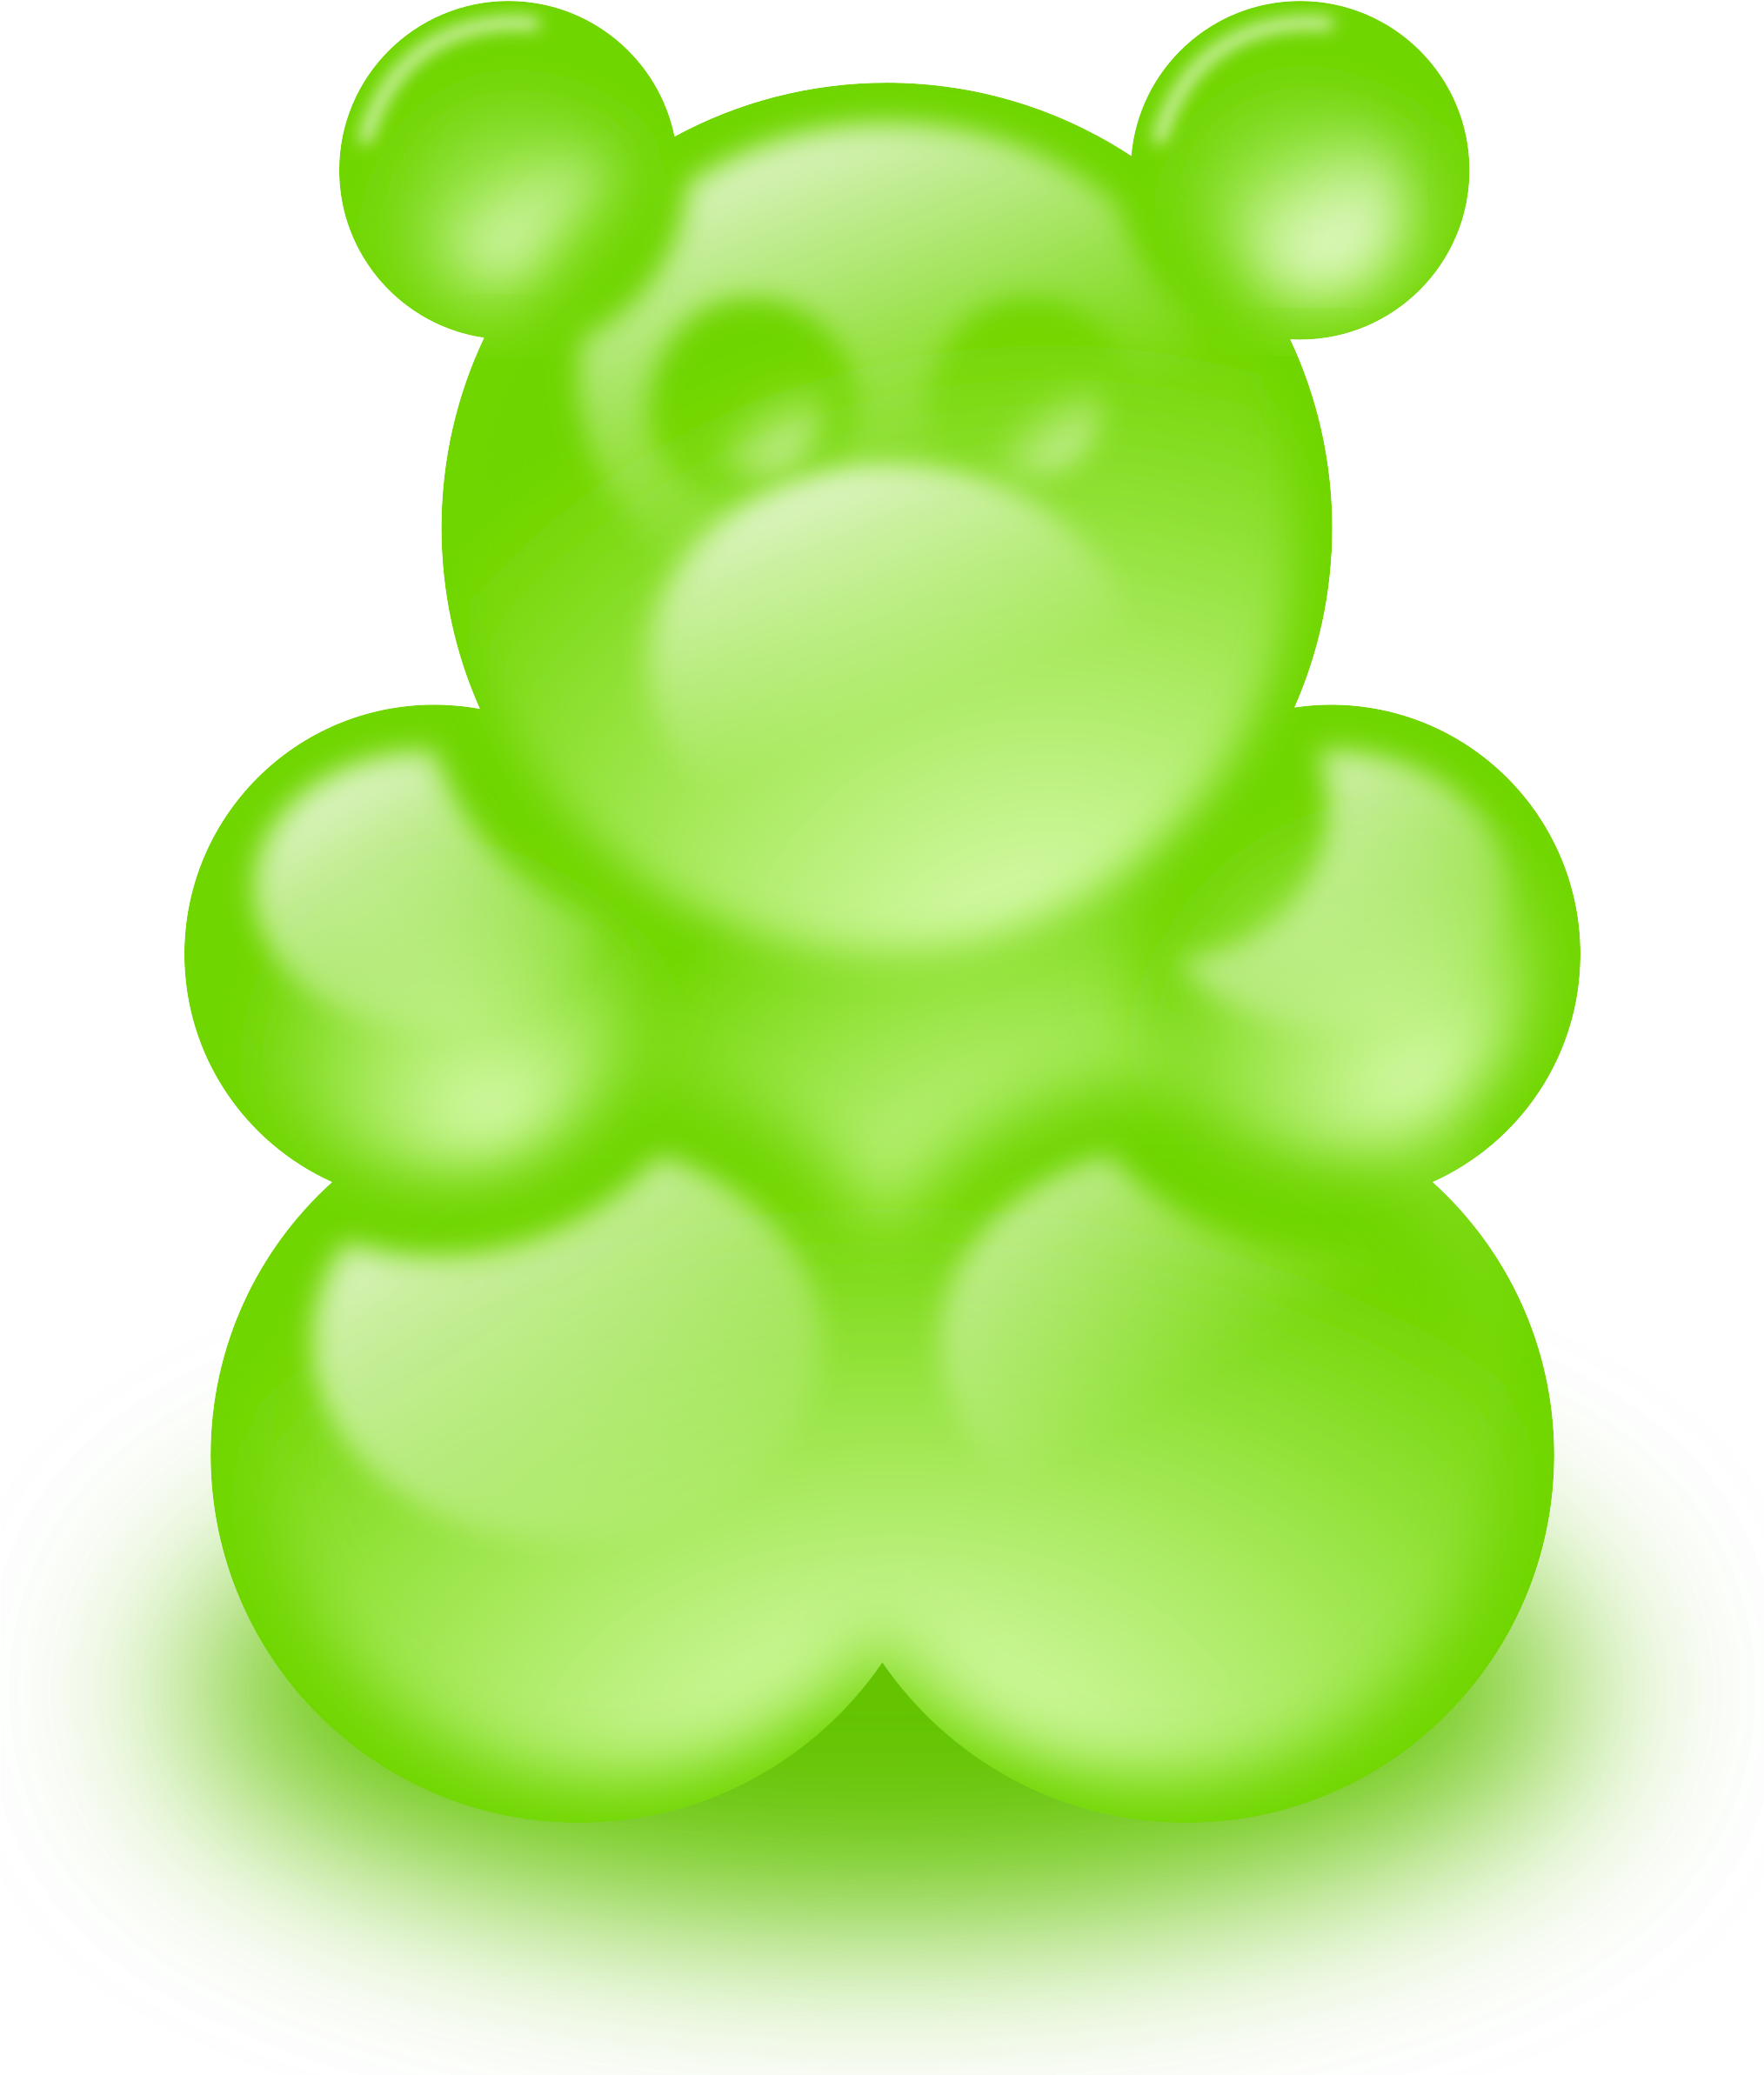 Bear - Gummy Bear Clip Art.